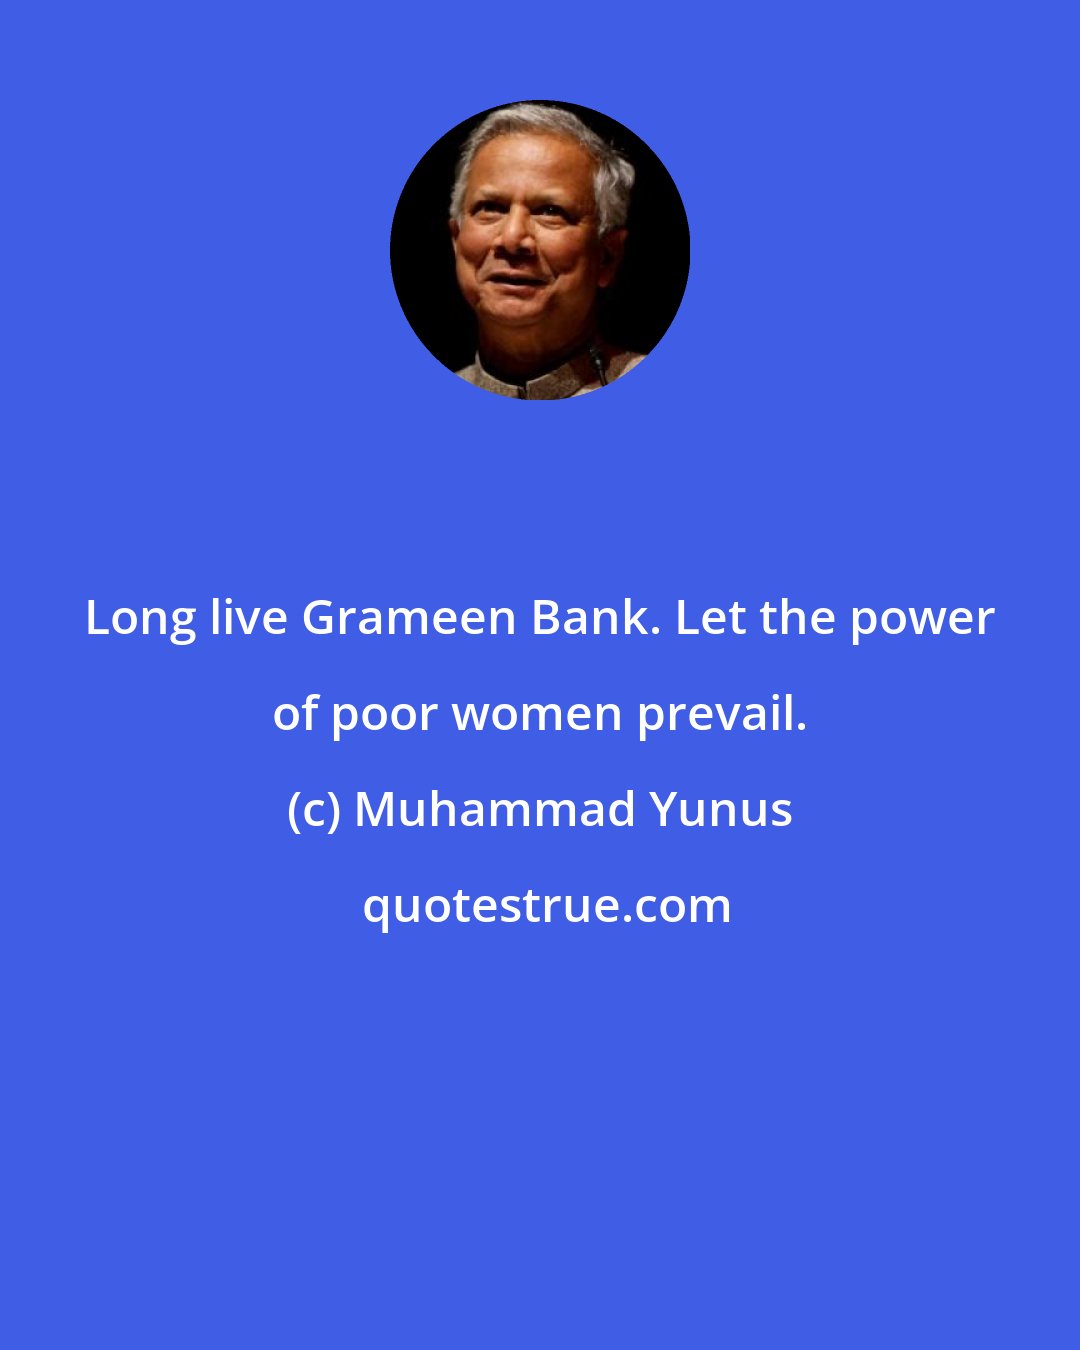 Muhammad Yunus: Long live Grameen Bank. Let the power of poor women prevail.